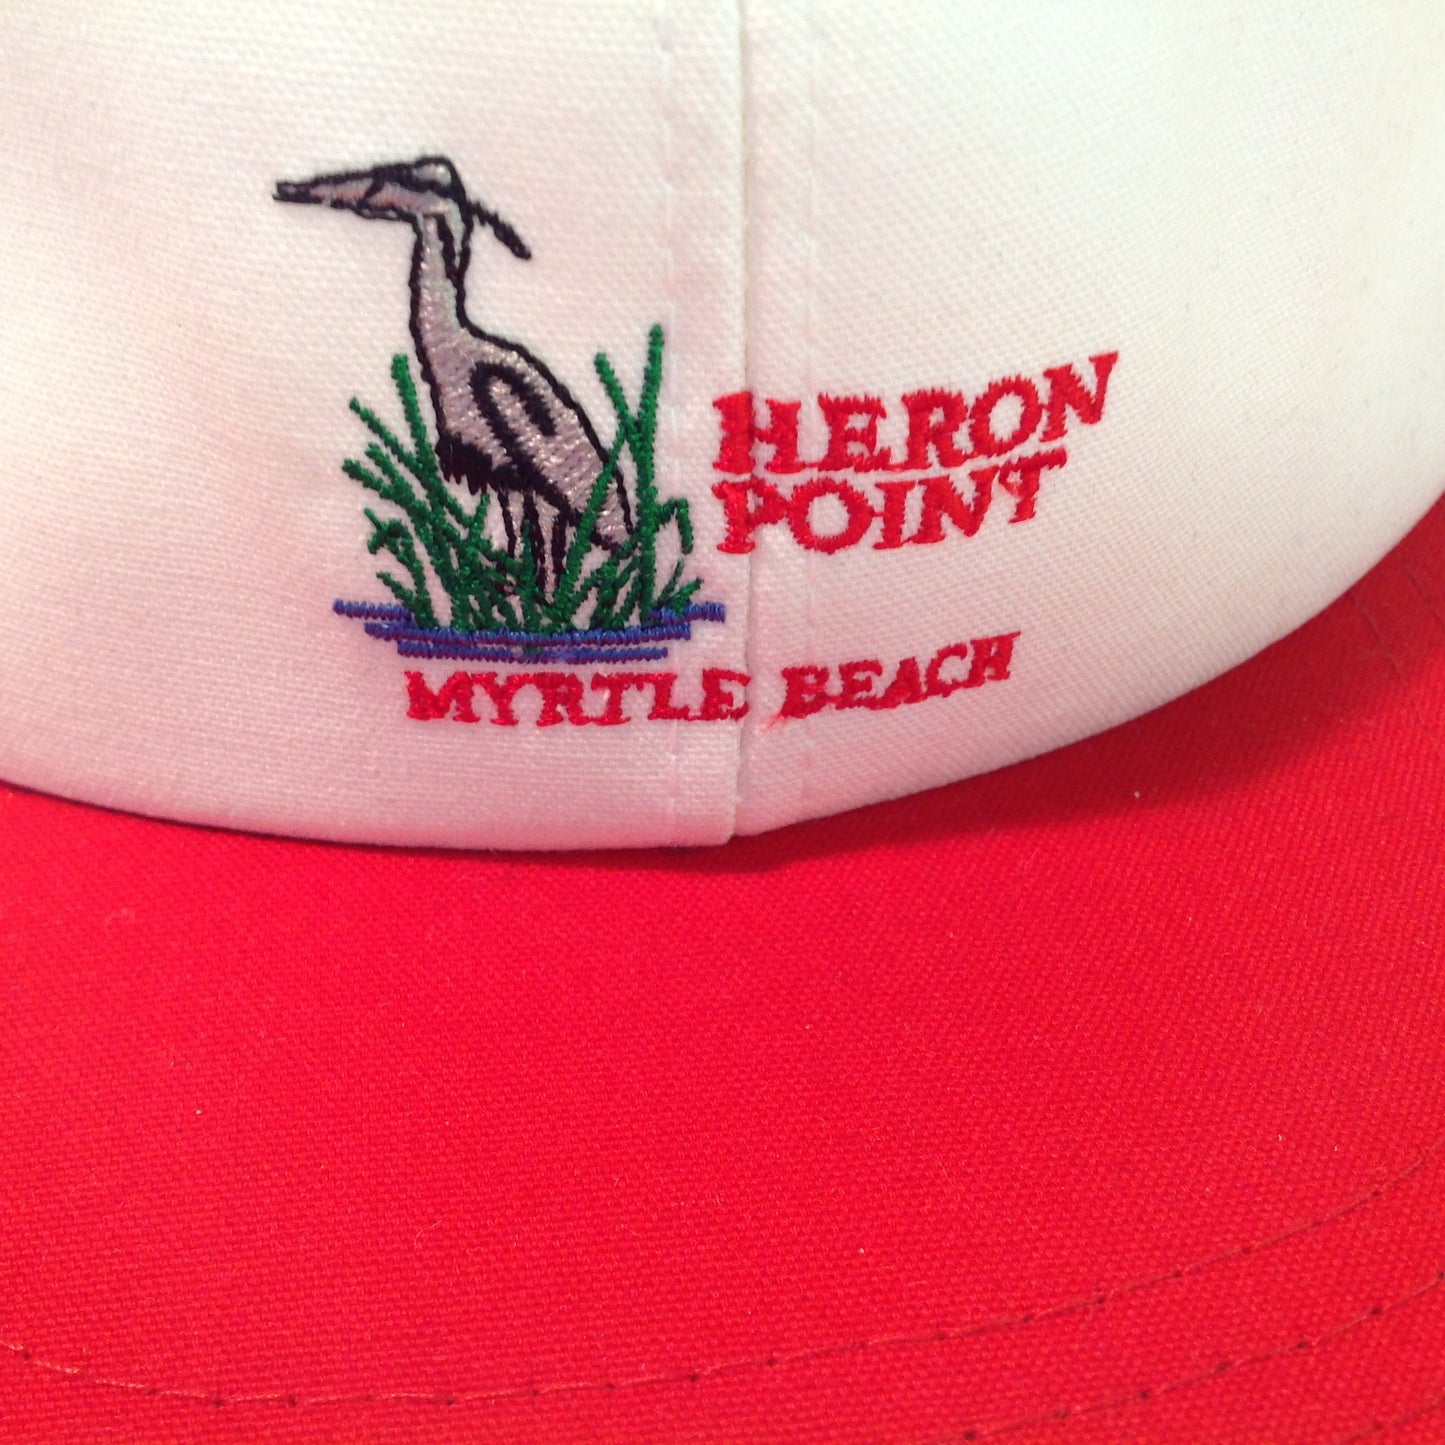 Vintage Derby Cap Heron Point North Myrtle Beach Tournament Souvenir White and Red Baseball Cap